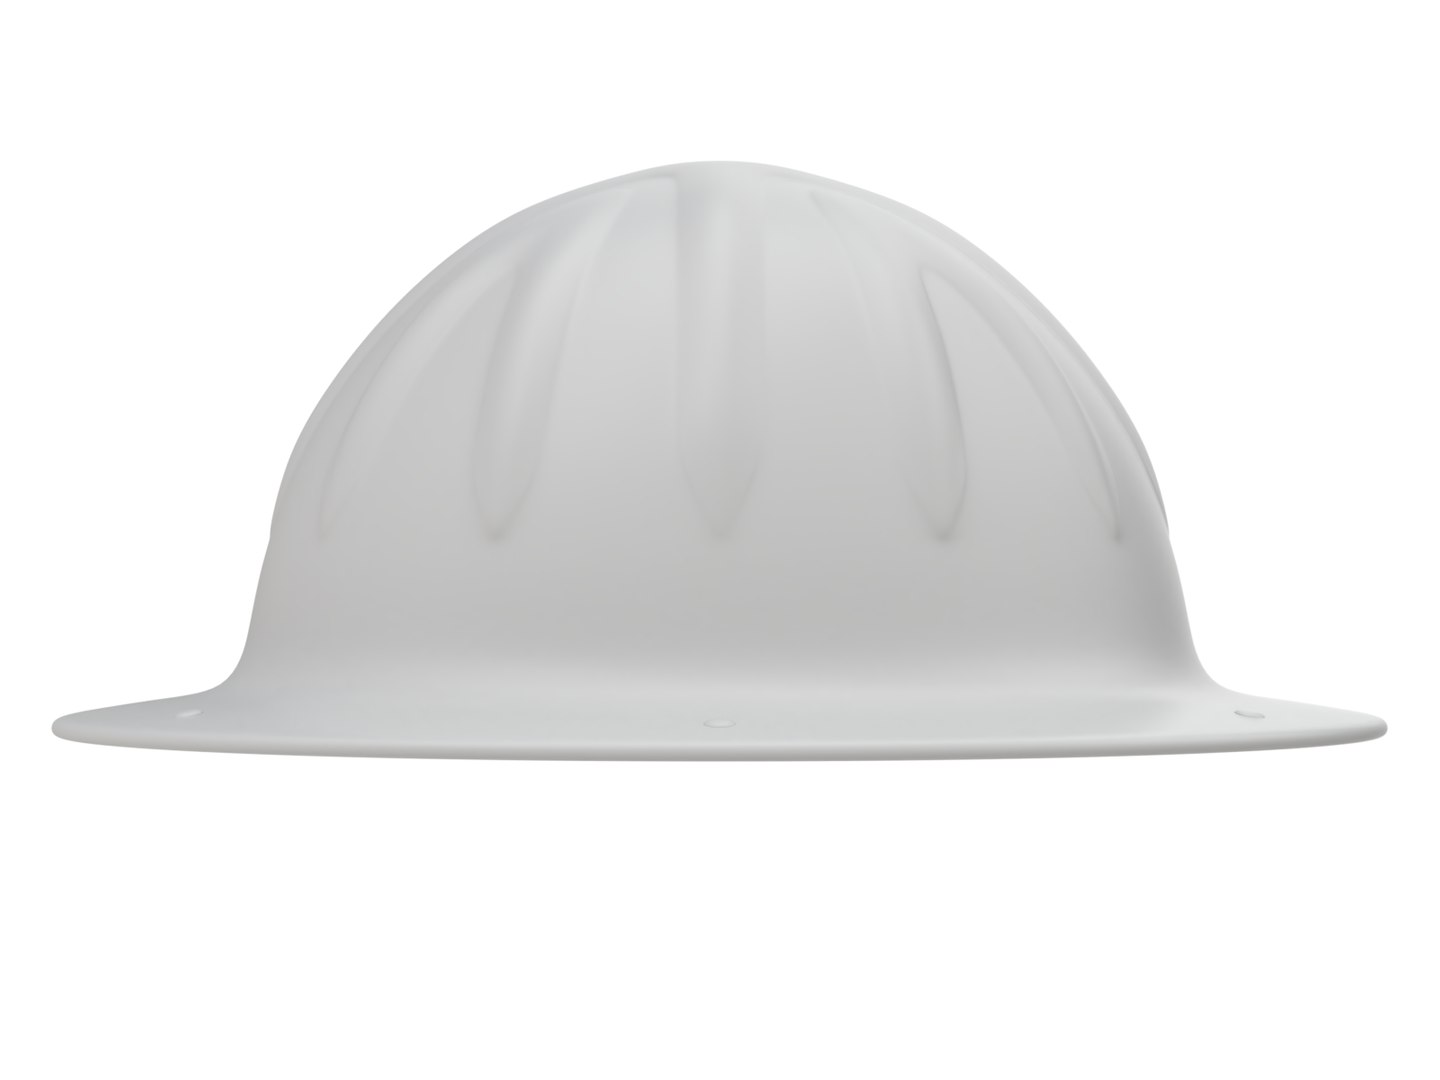 3D model aluminum bucket hat - TurboSquid 1691732